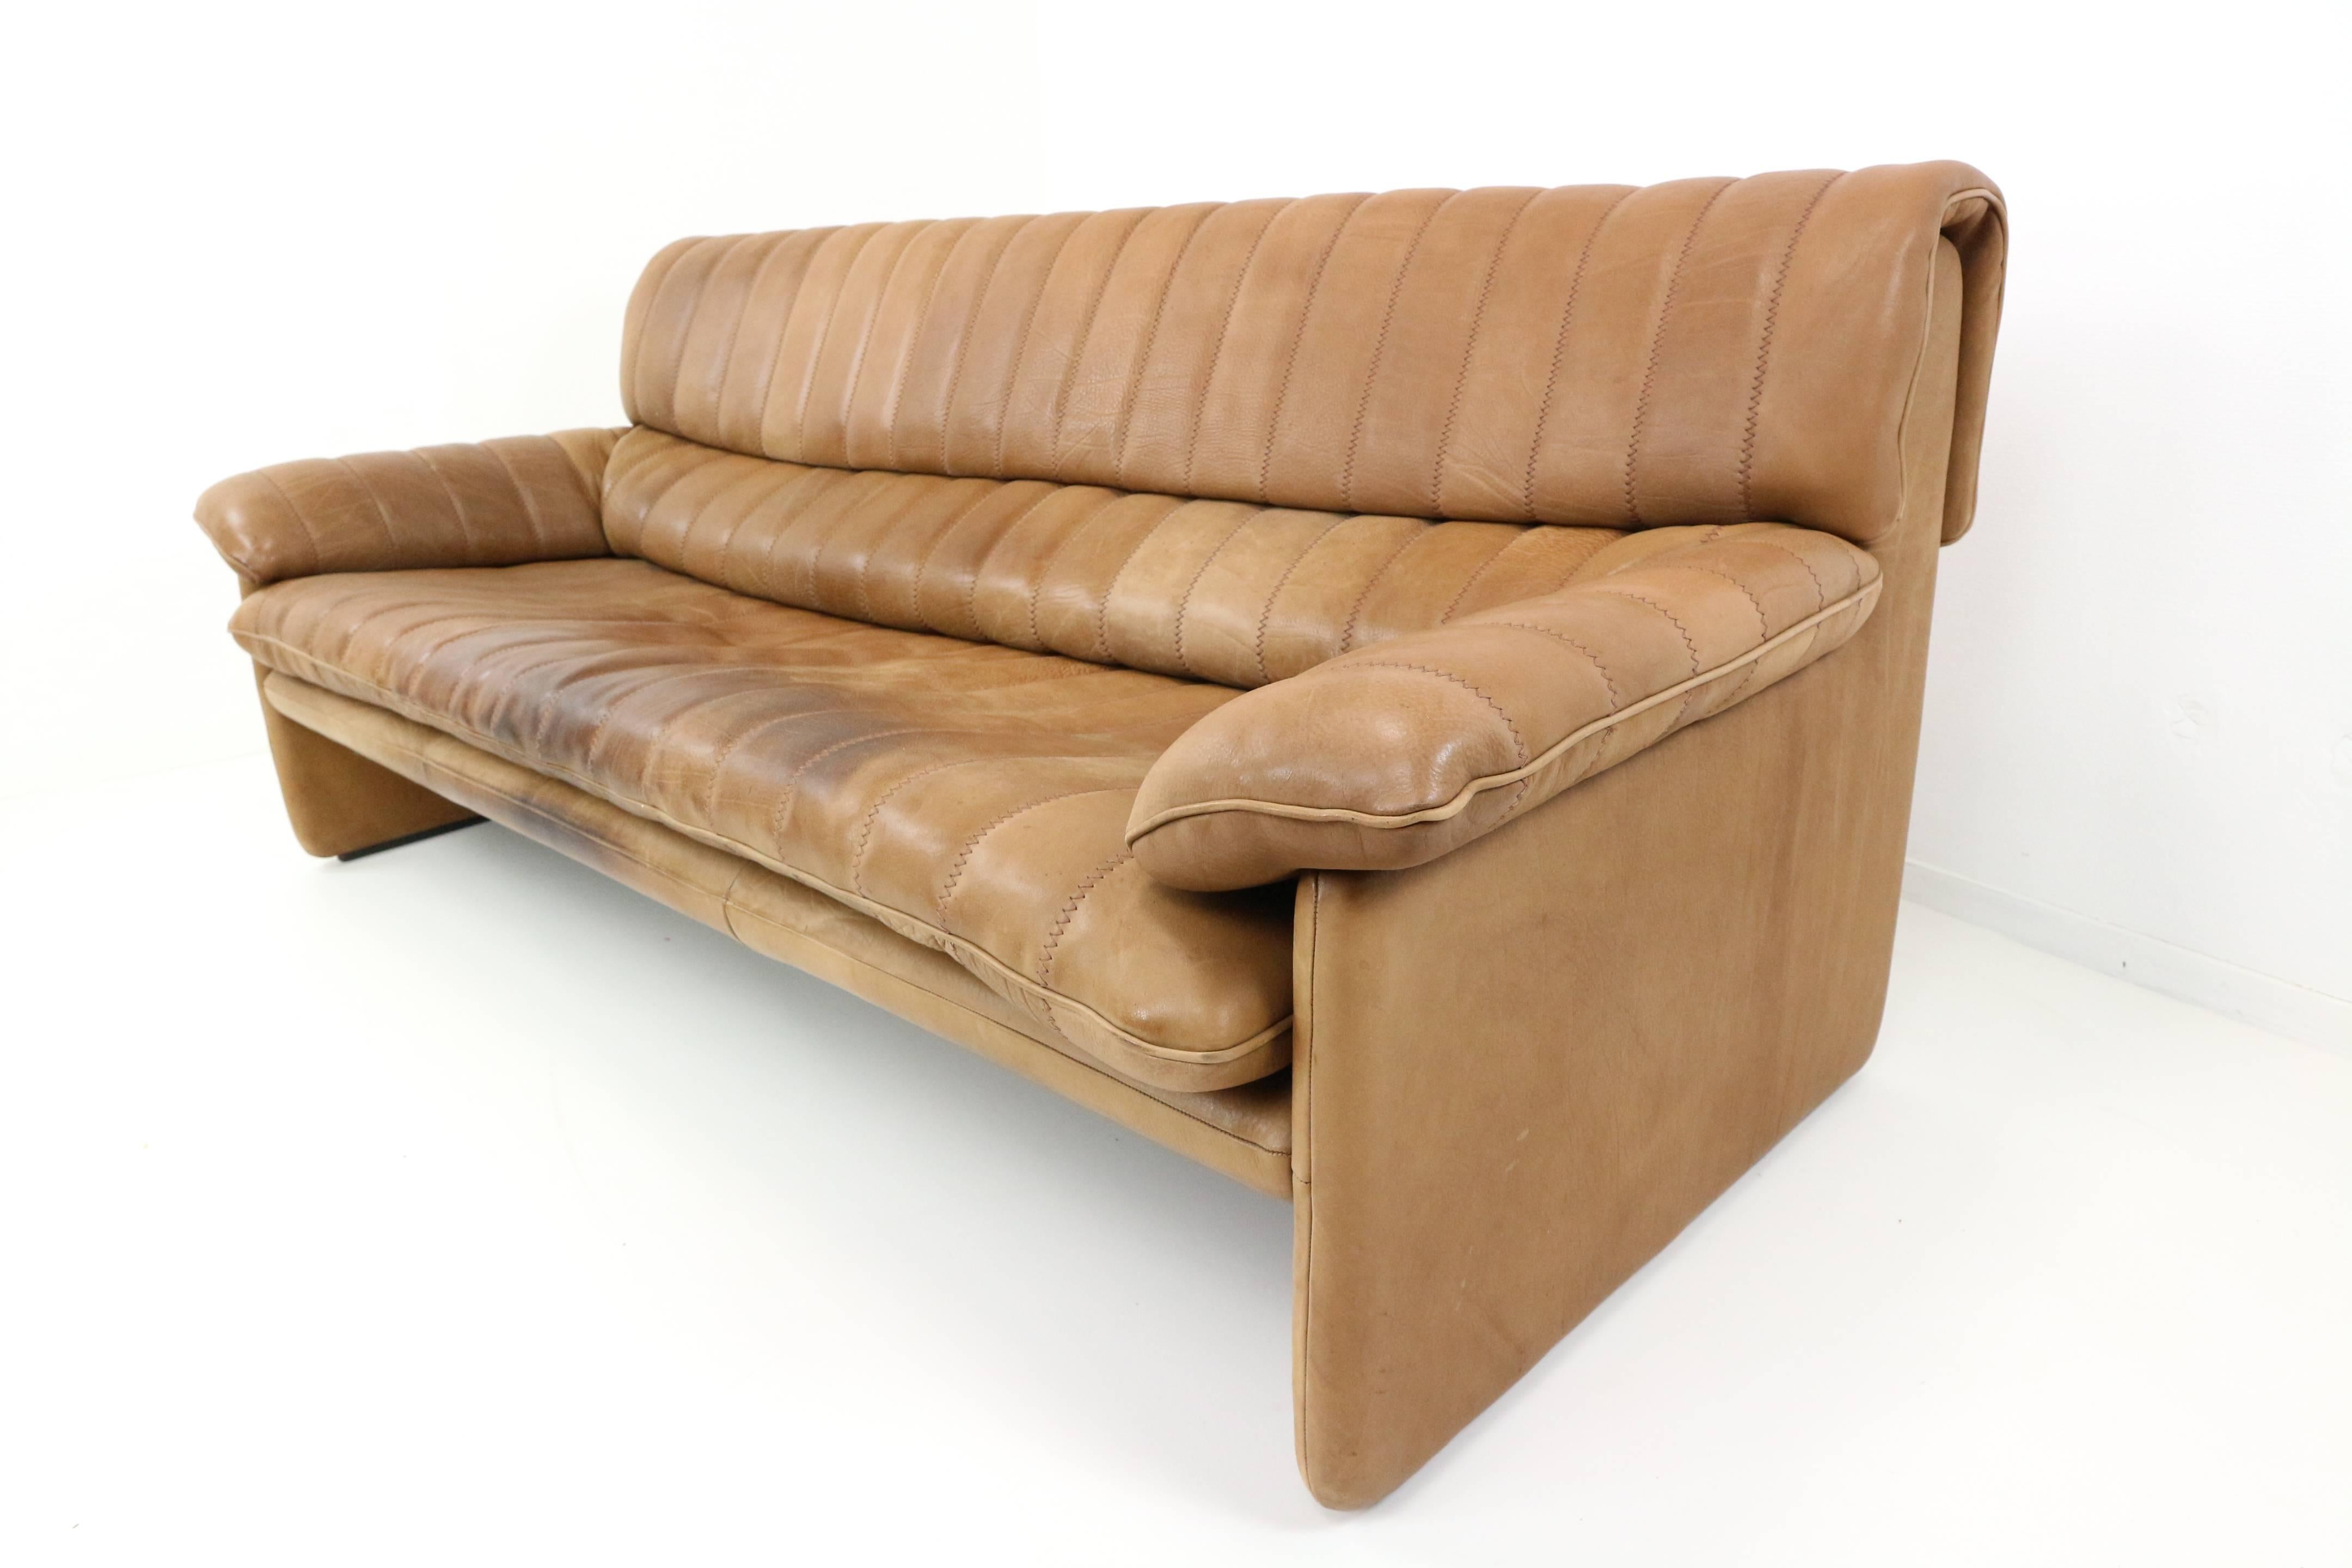 20th Century De Sede Ds-85 Leather Three-Seat, 1970s